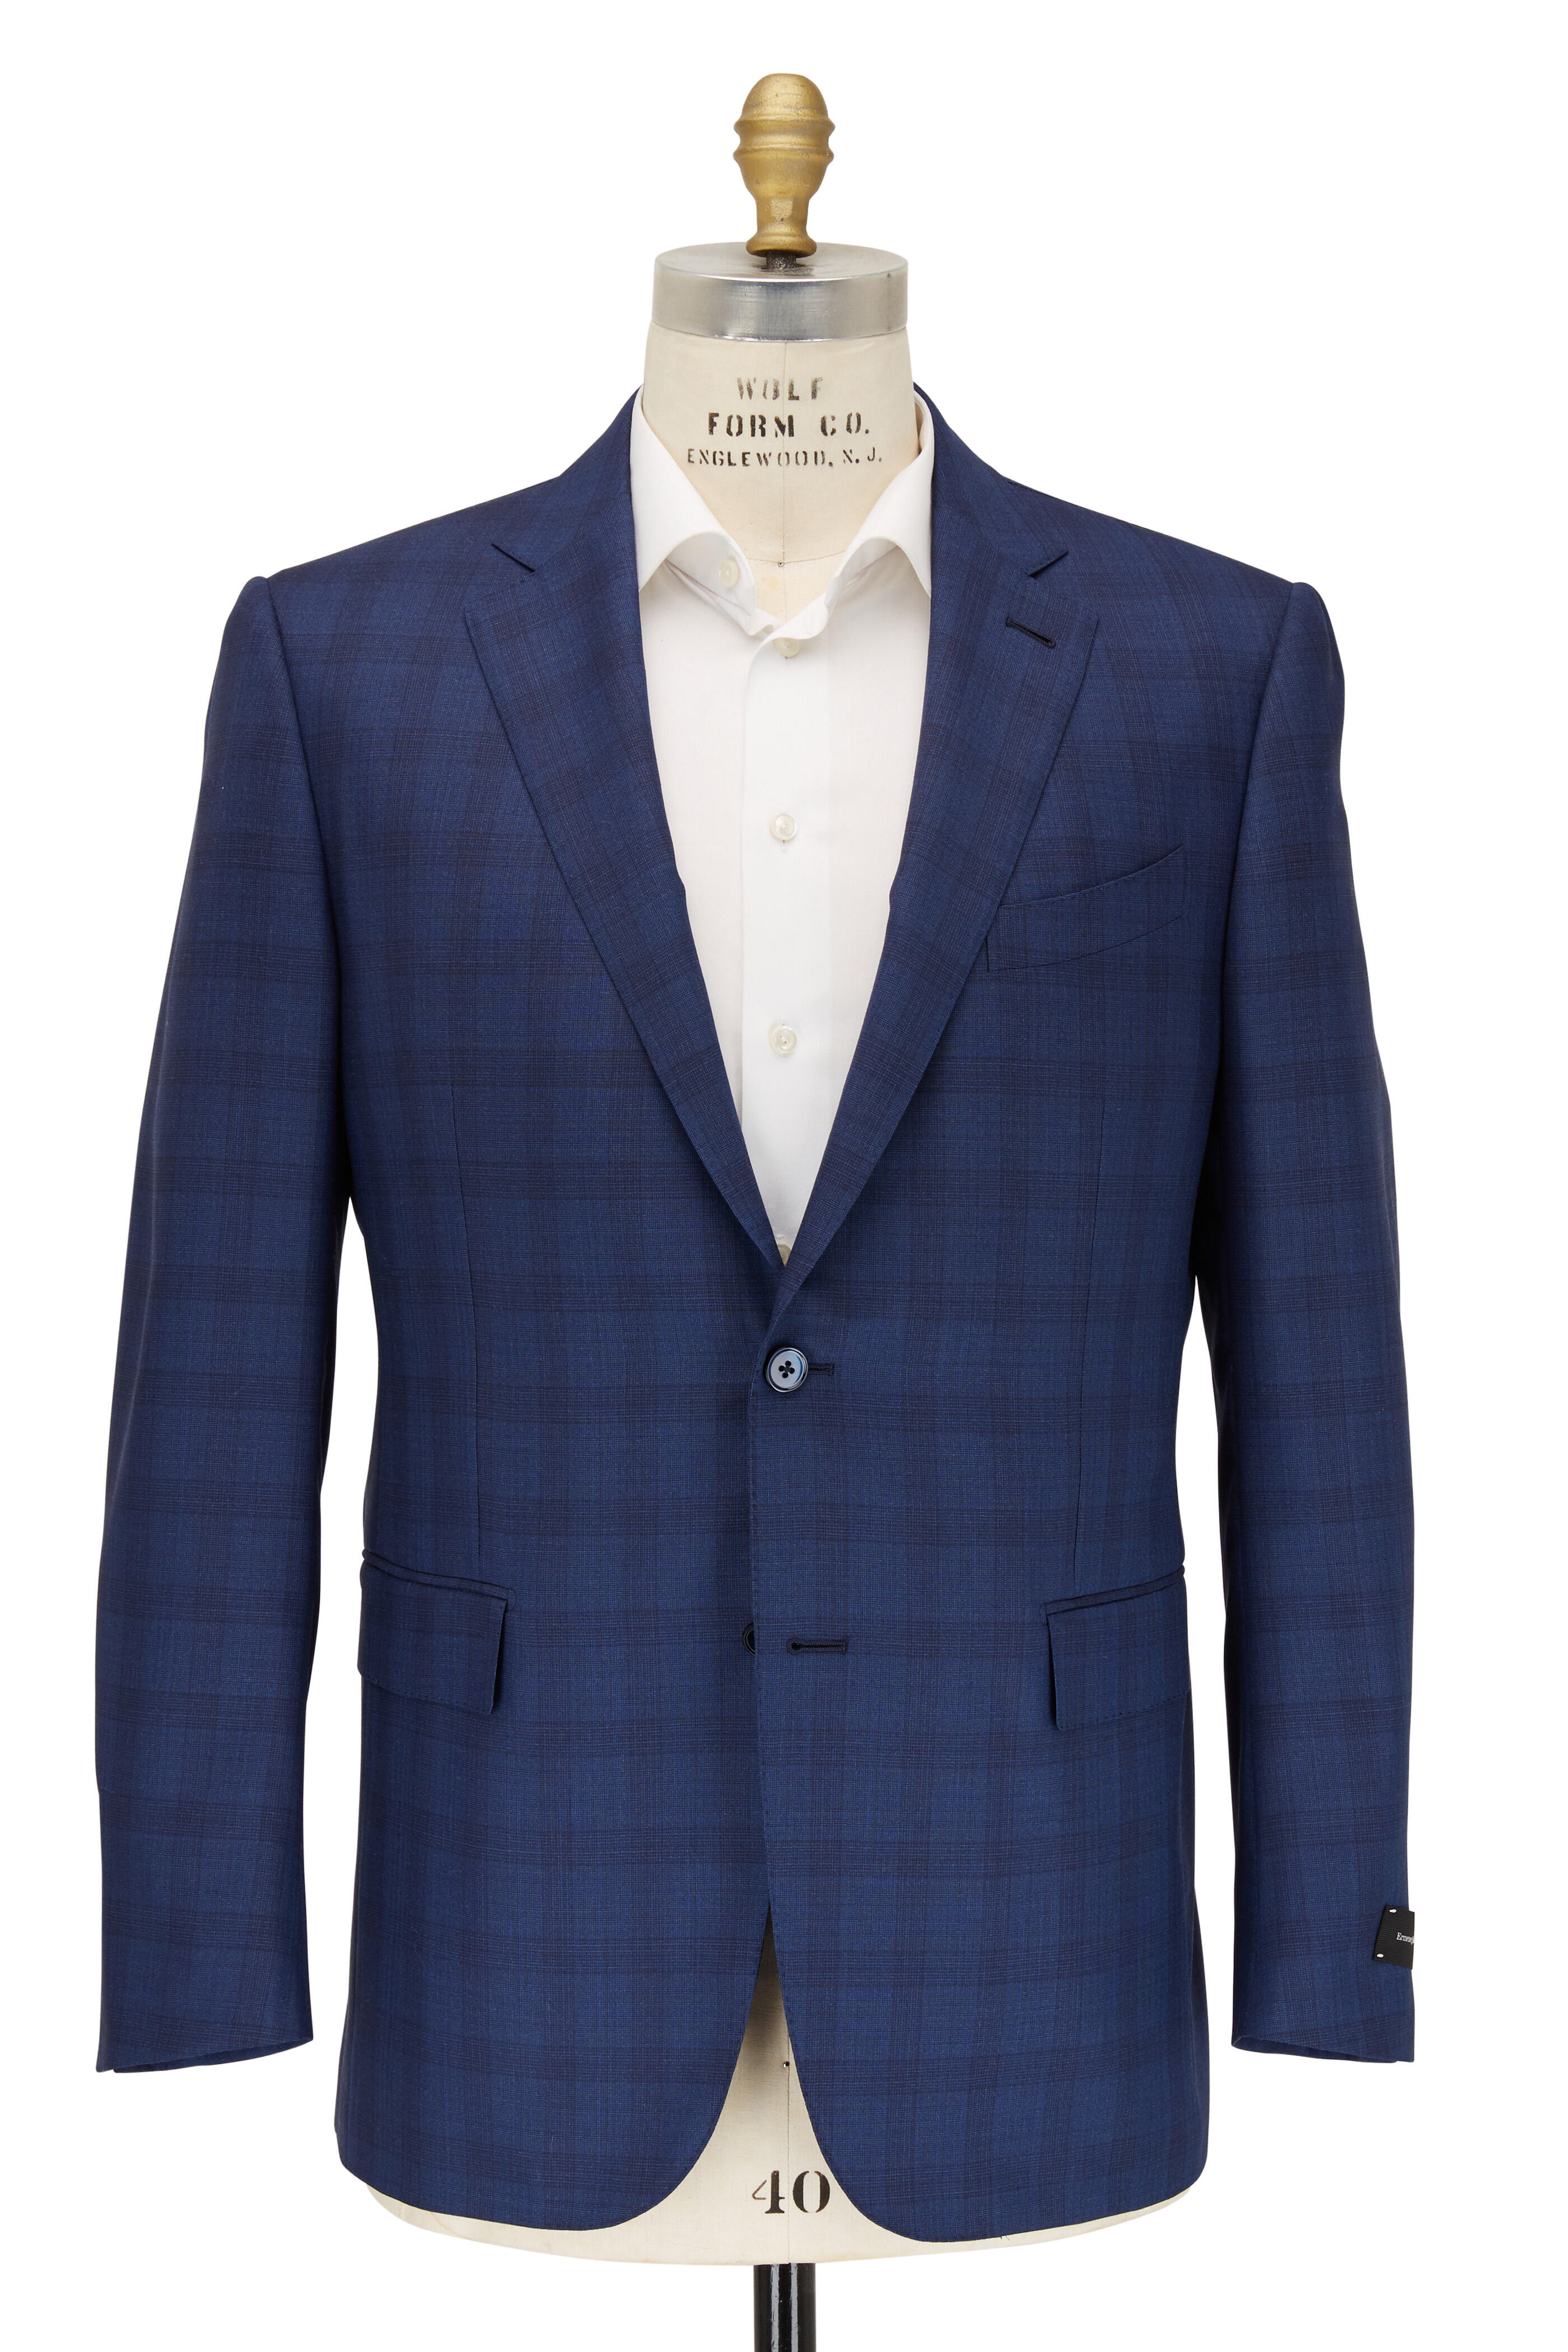 Zegna - Trofeo 600 Navy Blue Plaid Wool & Silk Suit